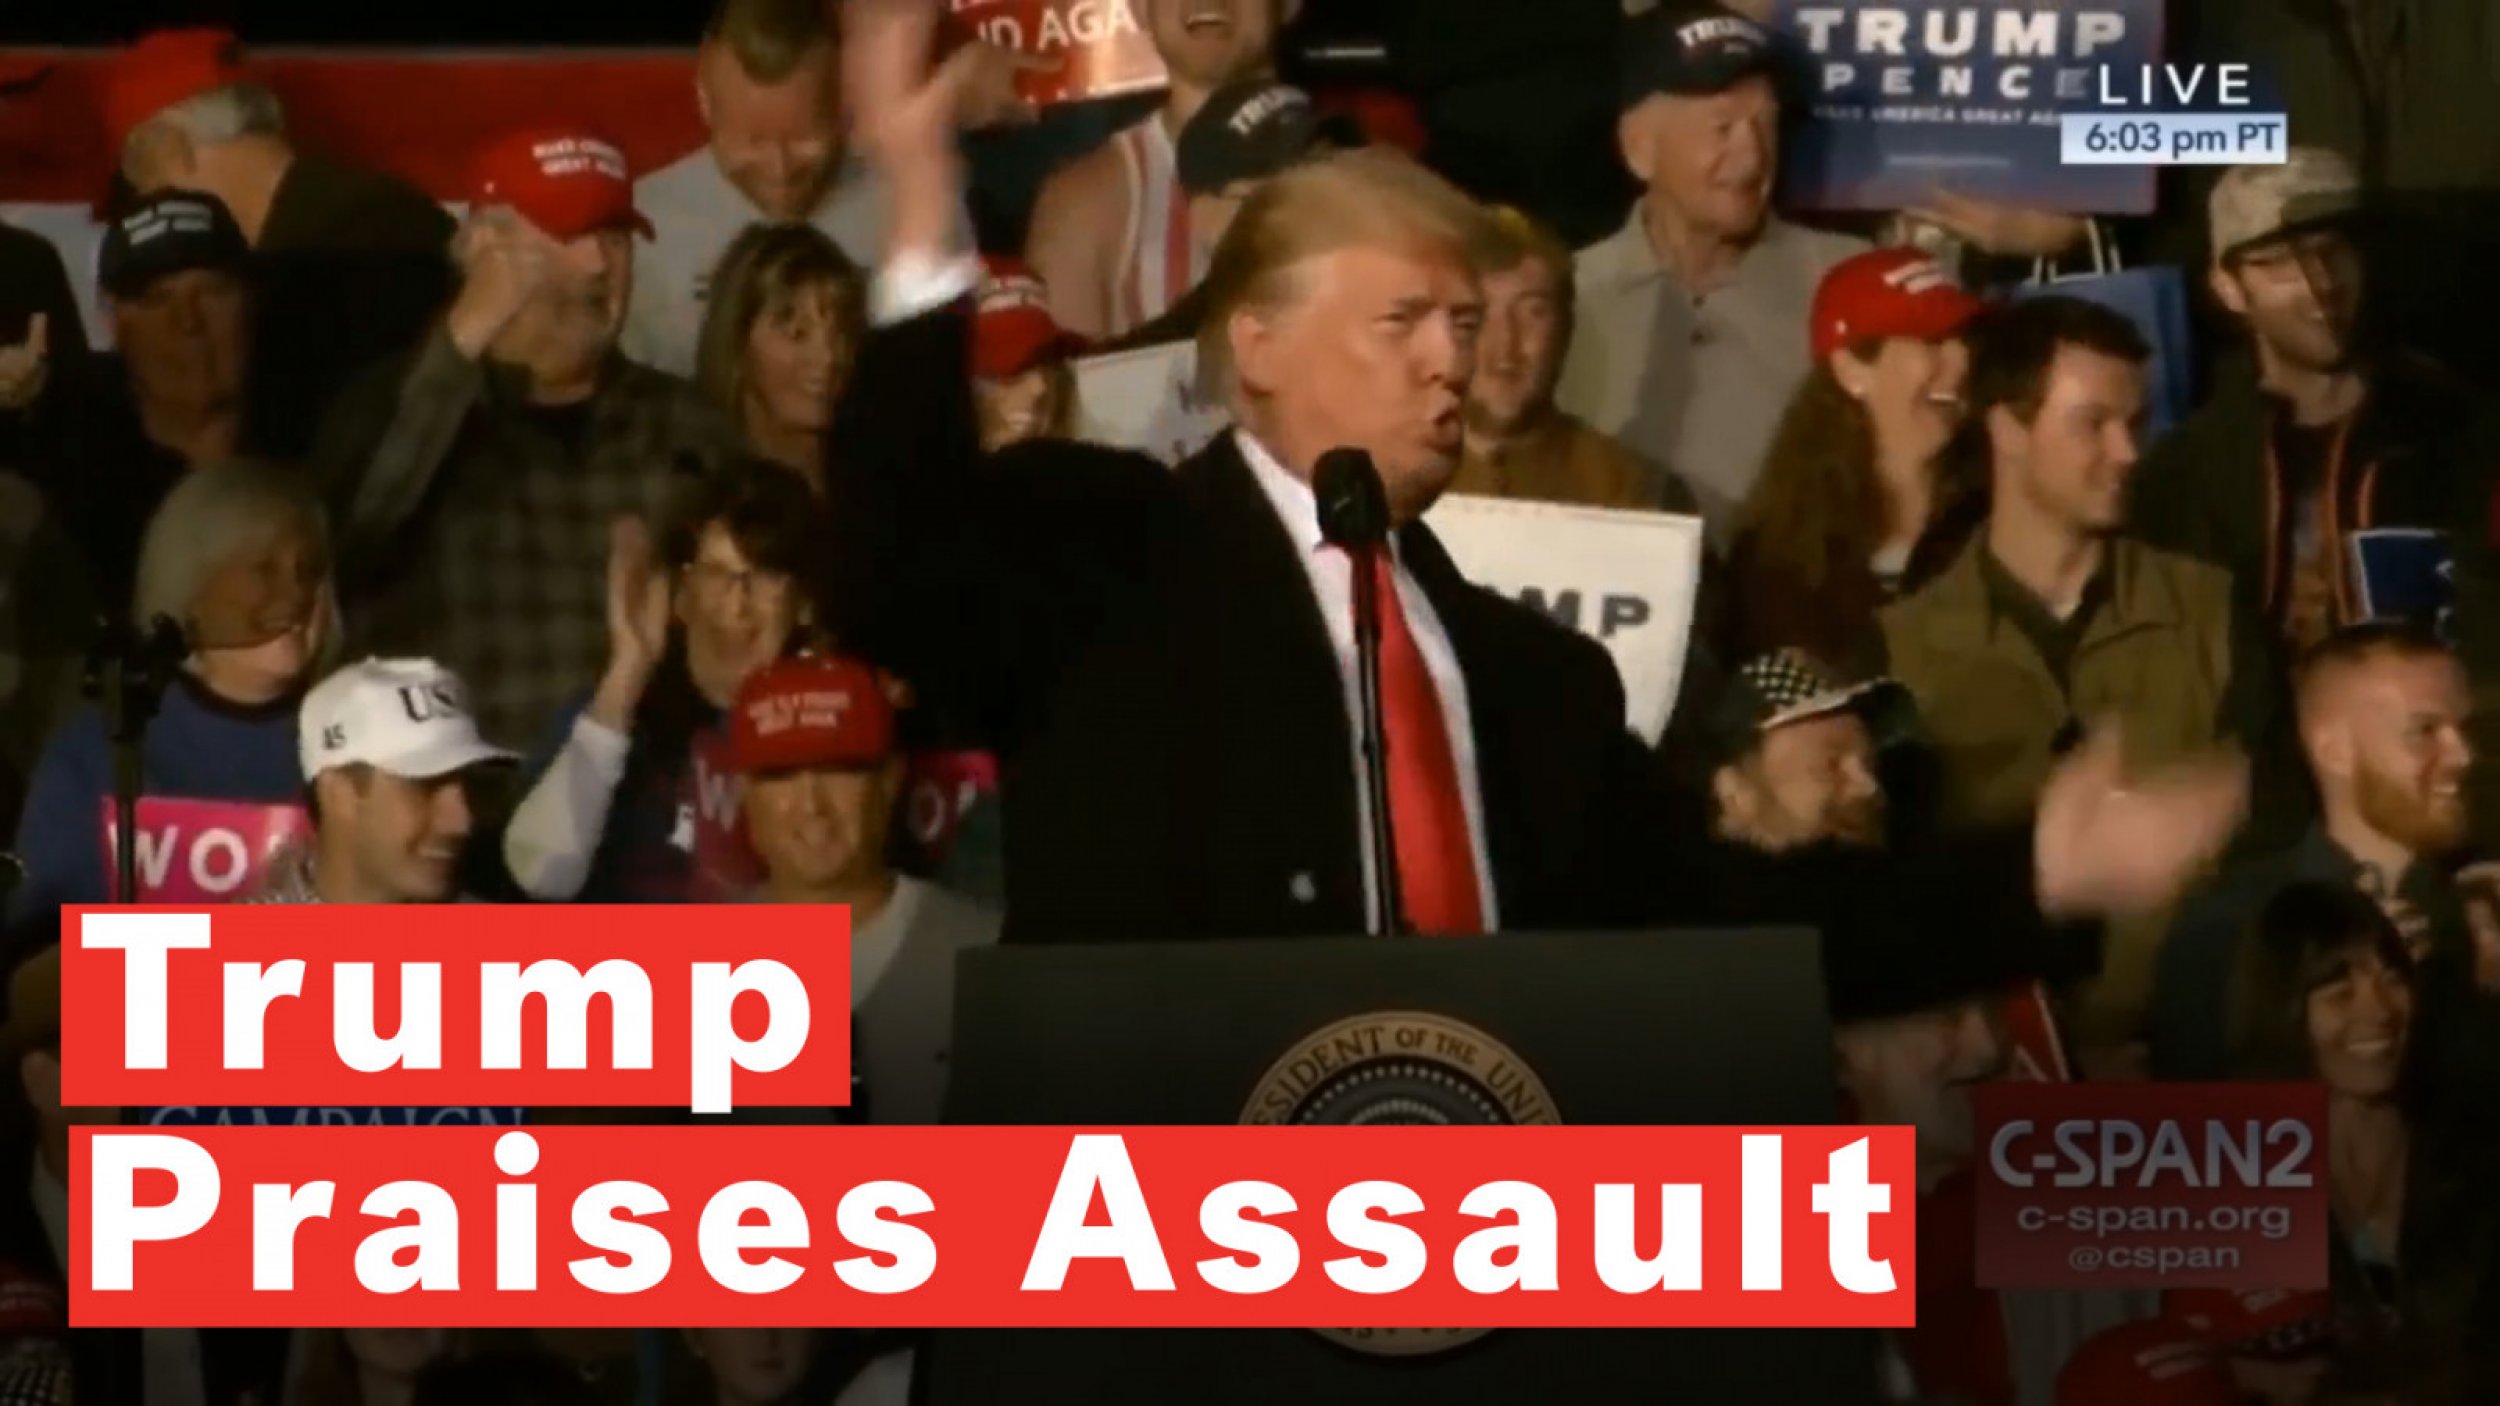 Trump Praises Assault On Reporter